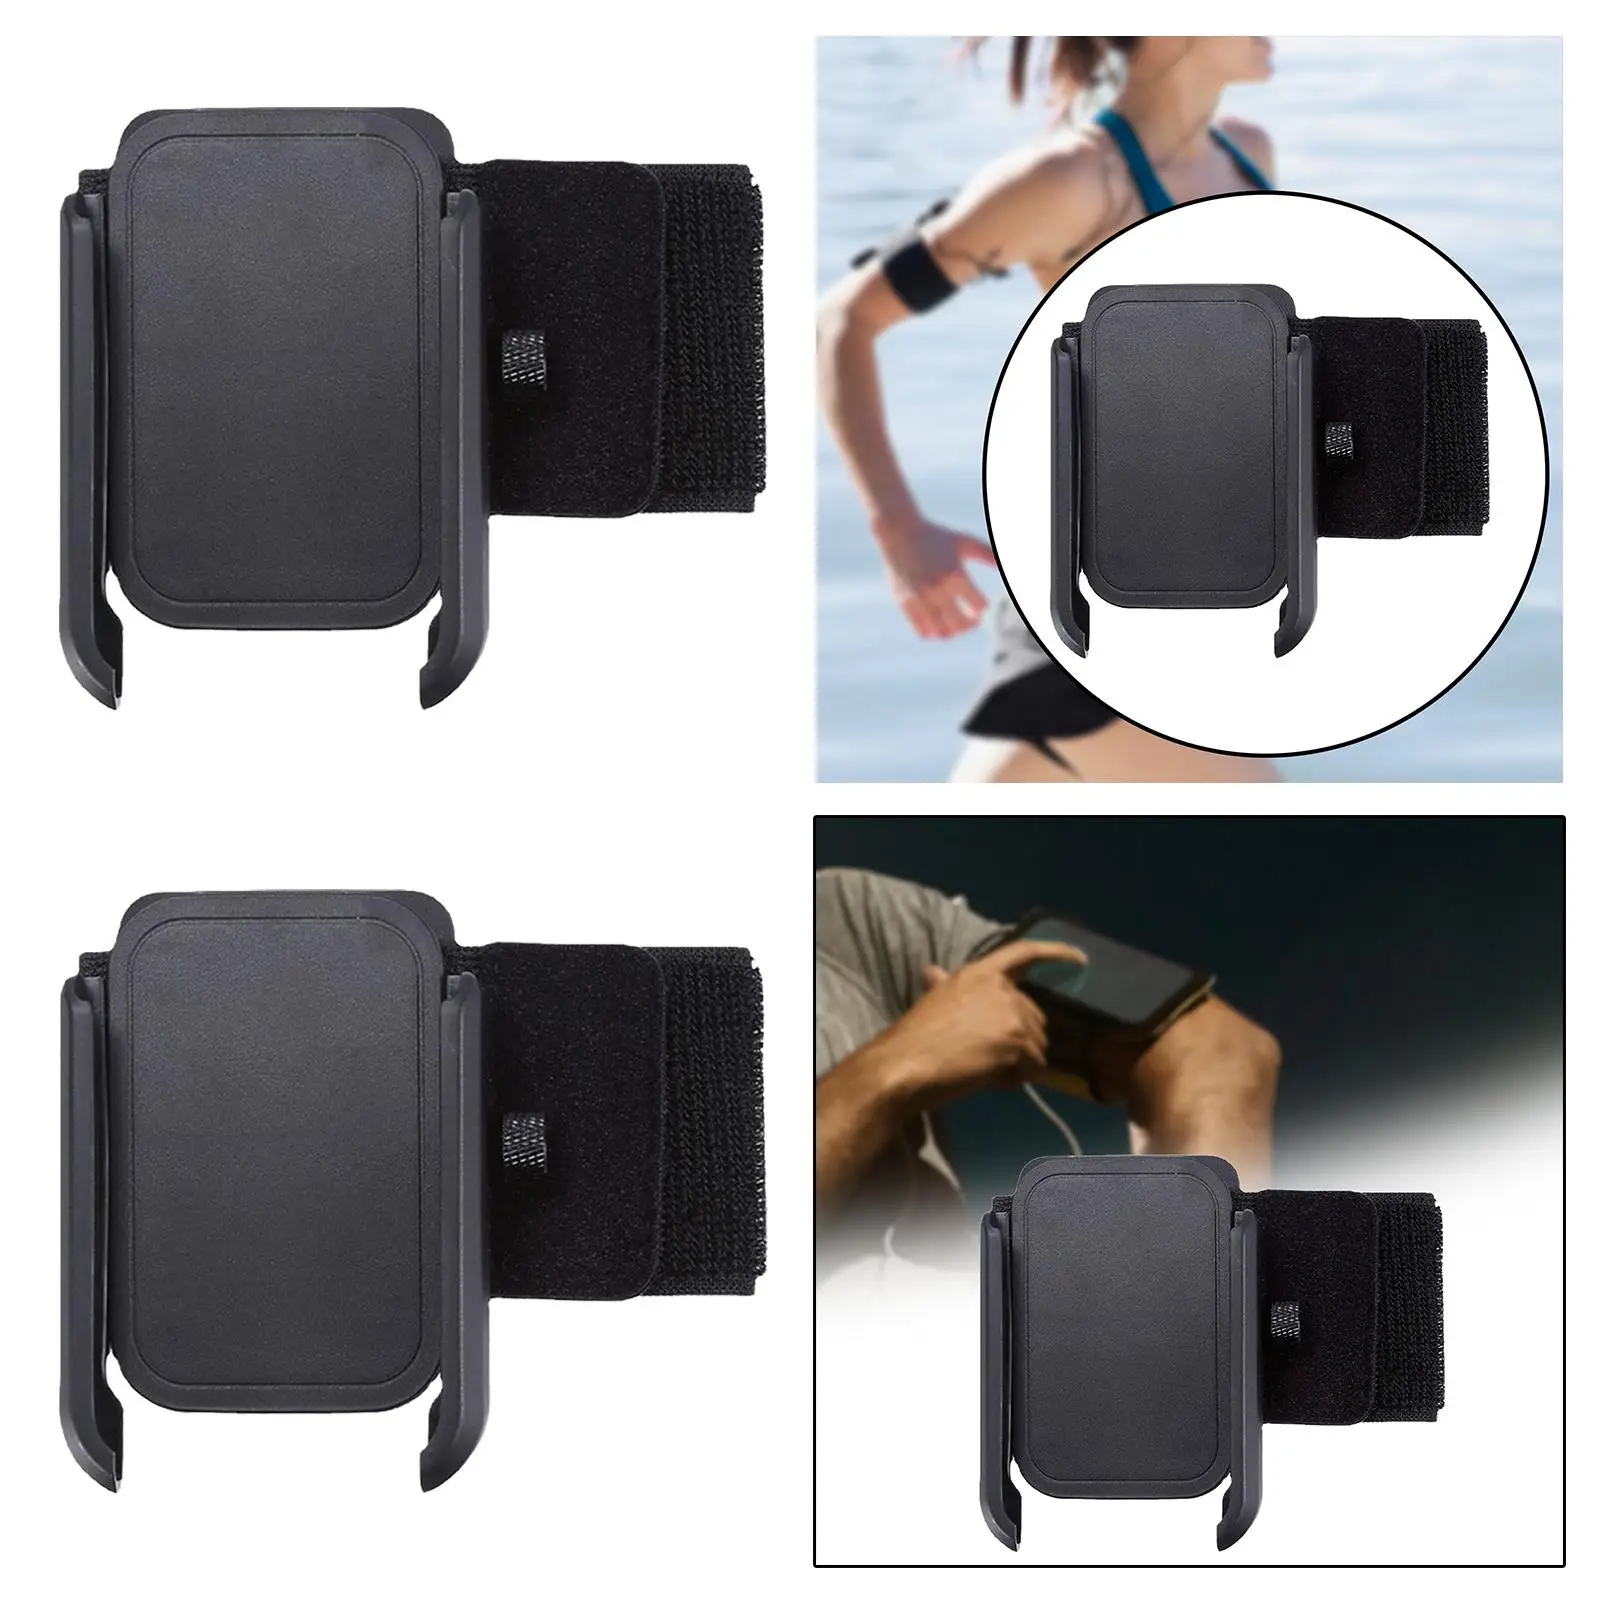 Running Phone Holder Adjustable Universal Stable Phone Bracket Fits Most Smartphones for Biking Hiking Workout Exercise Fishing